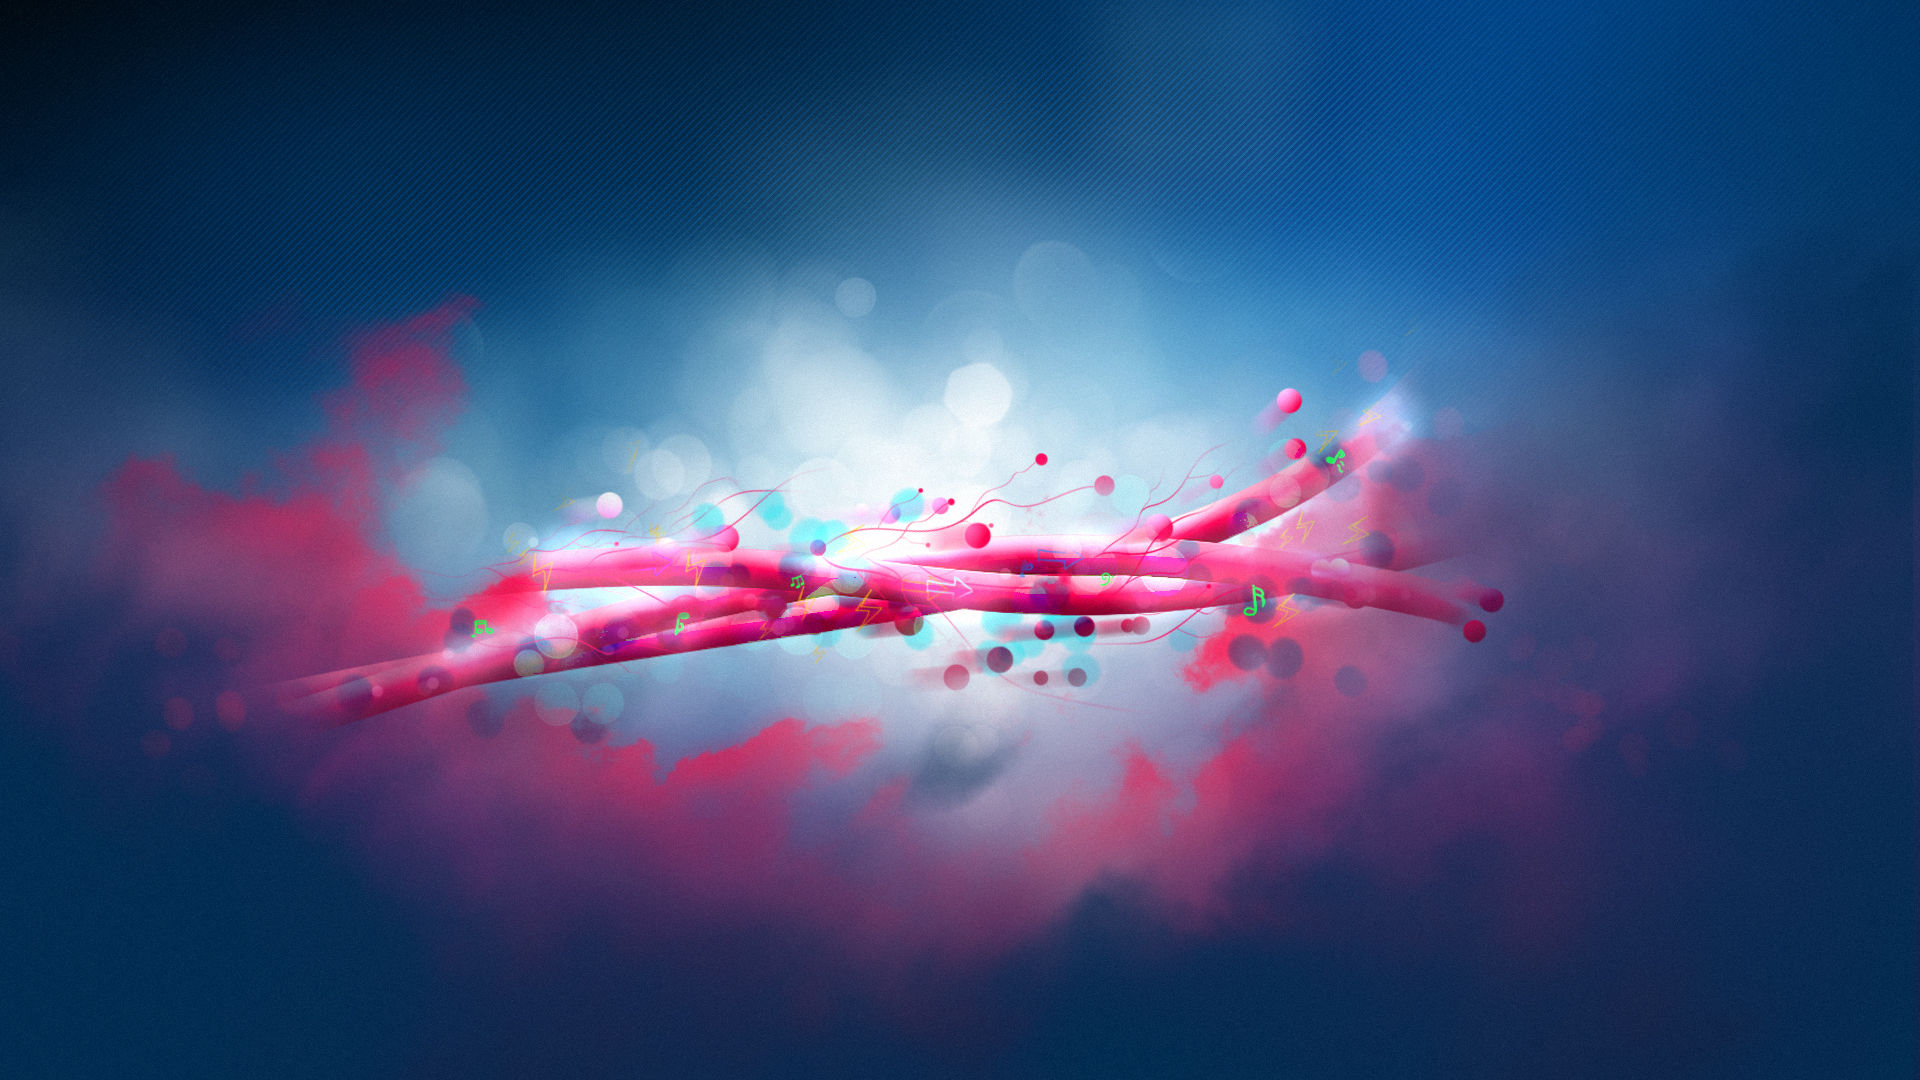 magic wallpaper download,red,water,sky,blue,pink